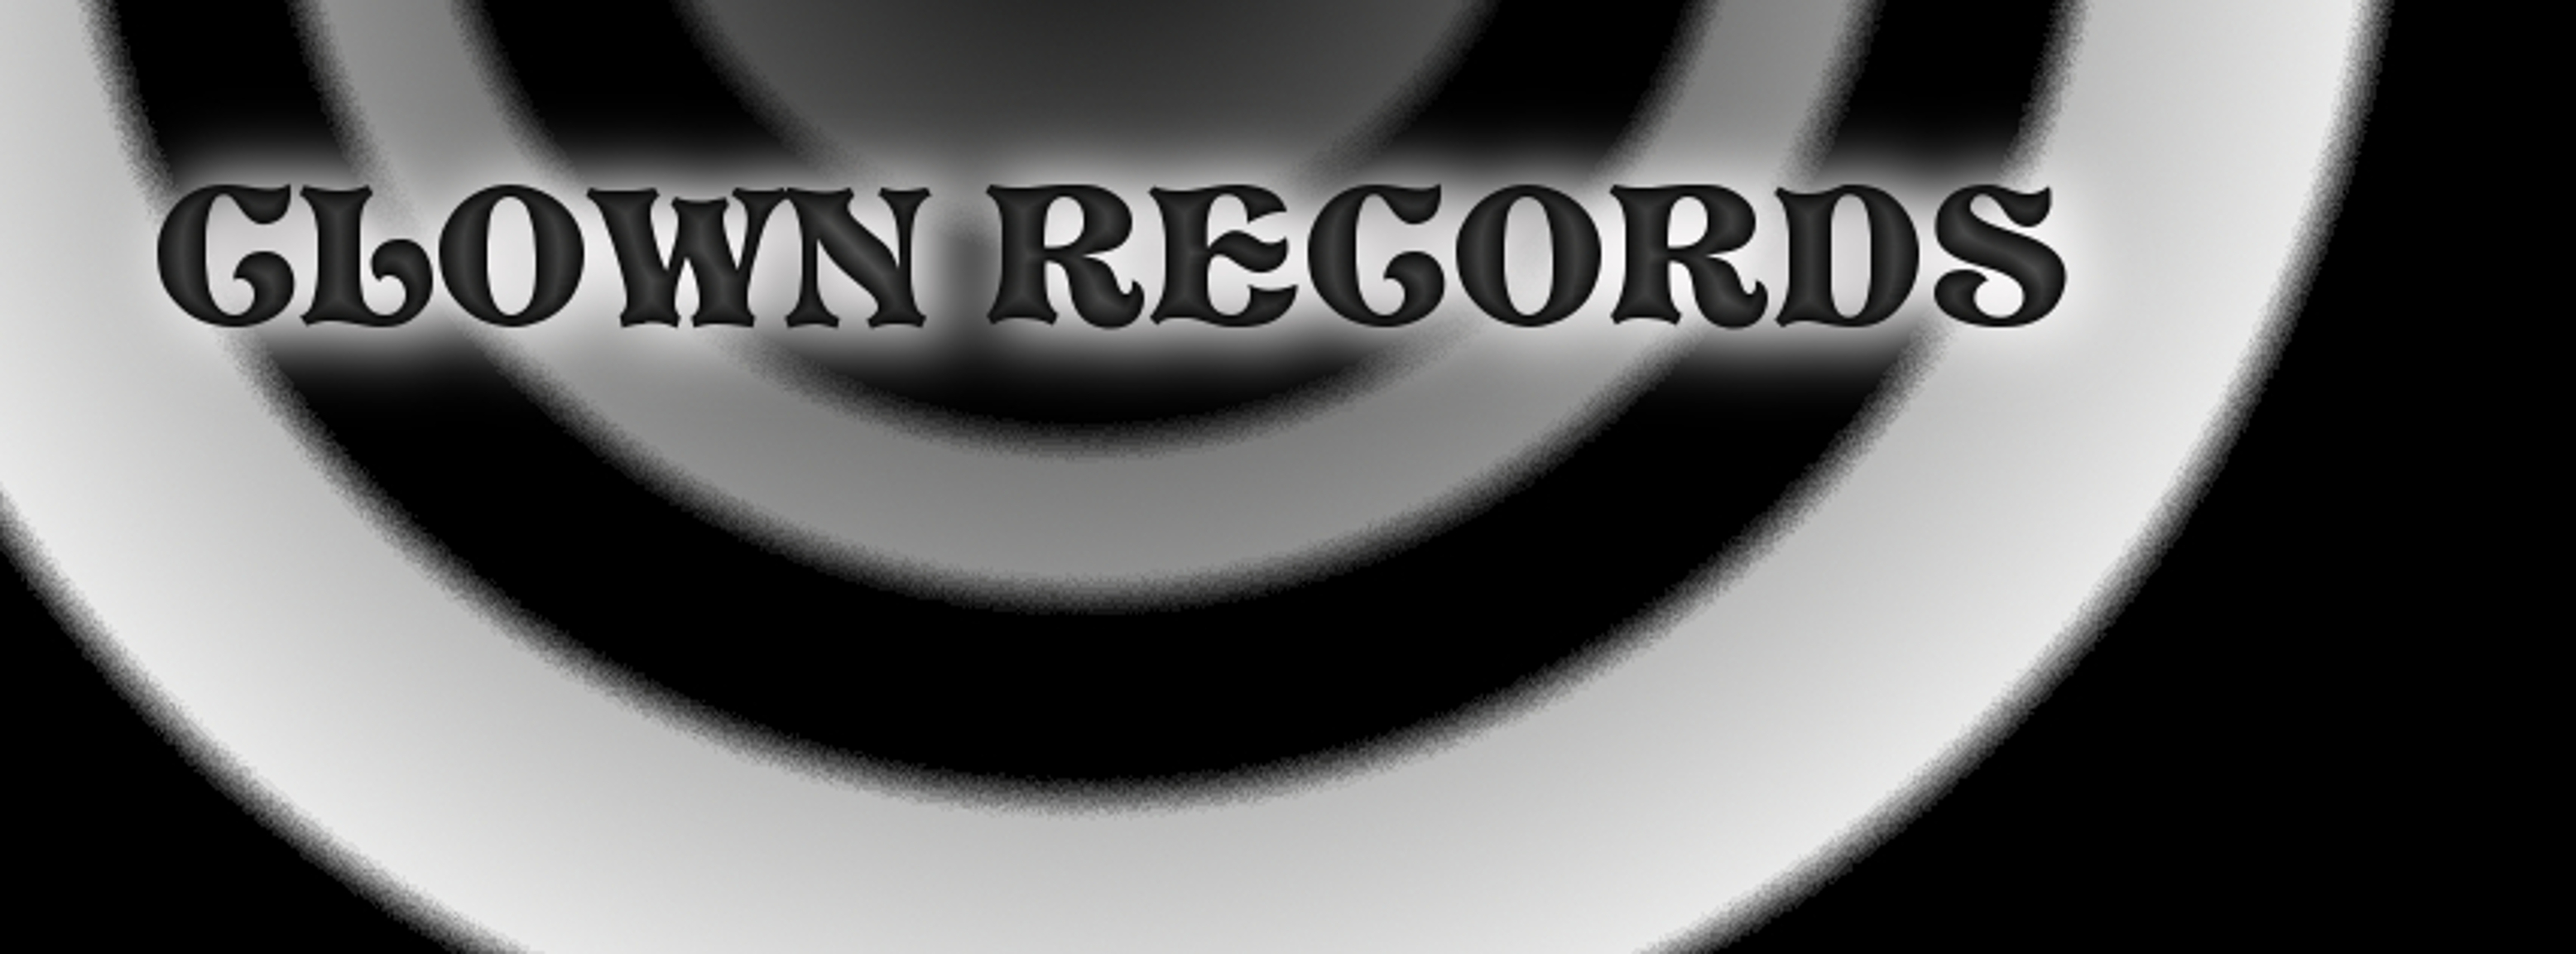 Clown Records semi-circle logo banner